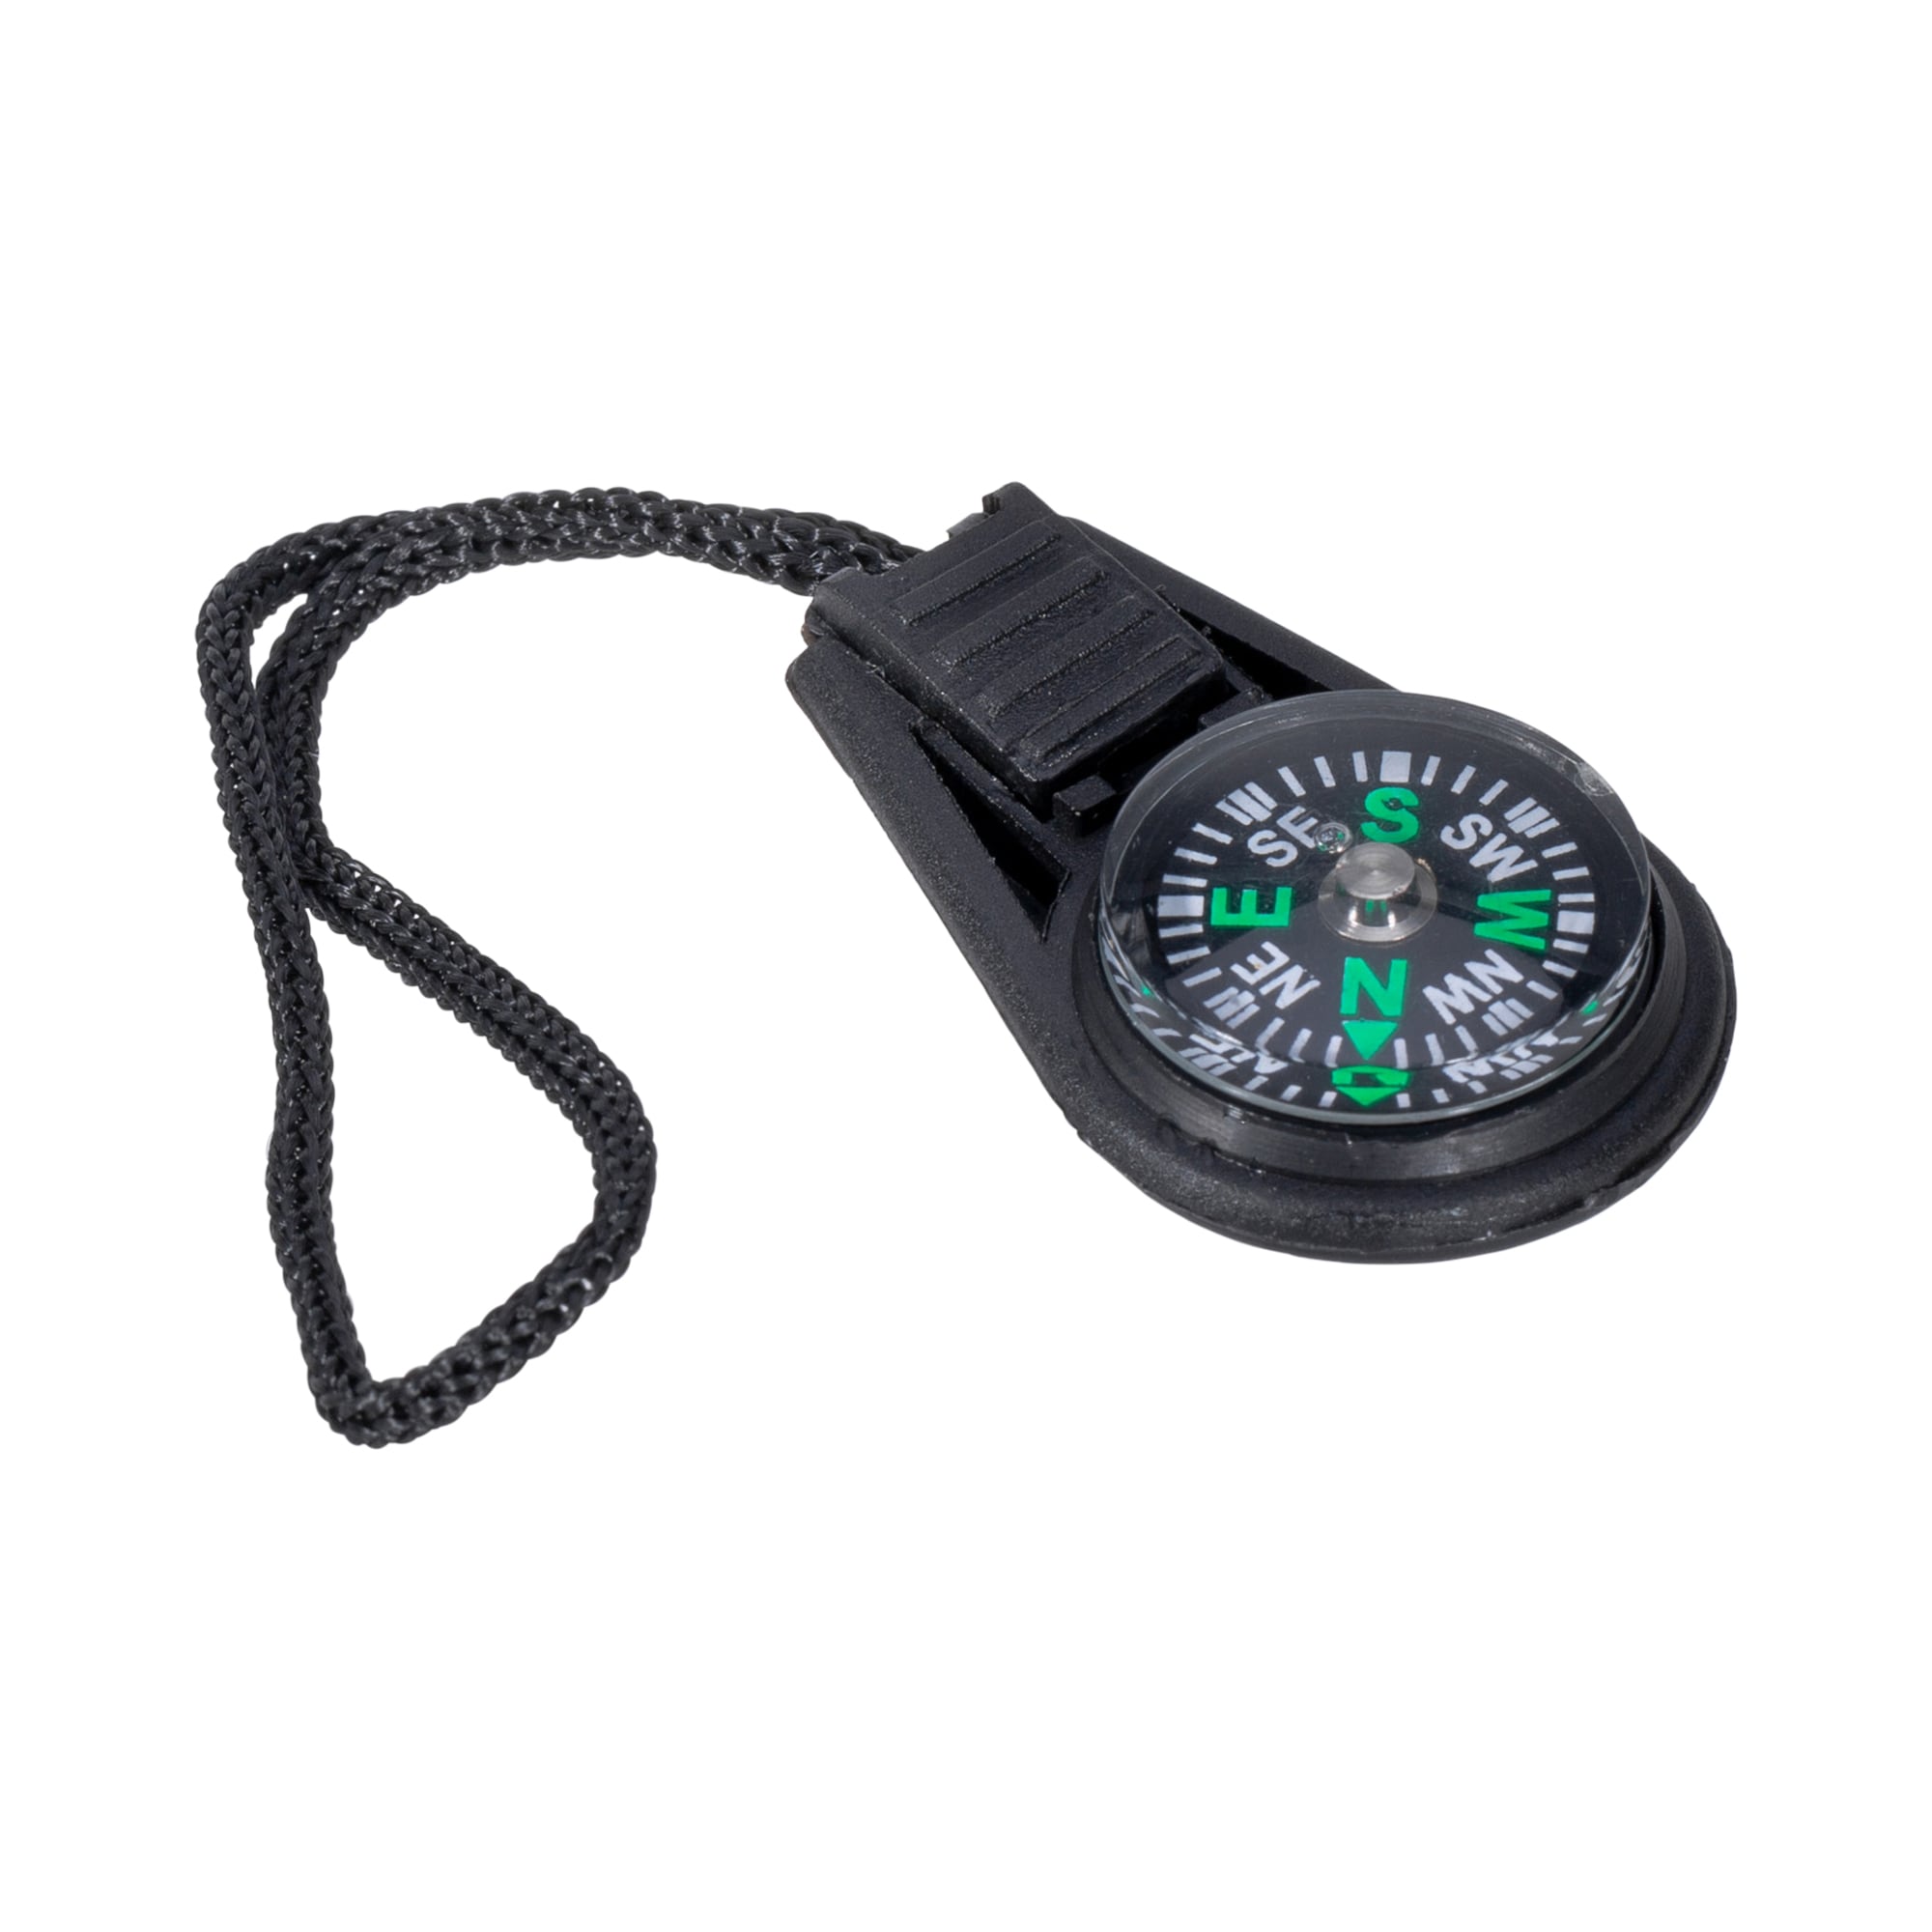 Purchase the Zipper Mini-Compass by ASMC